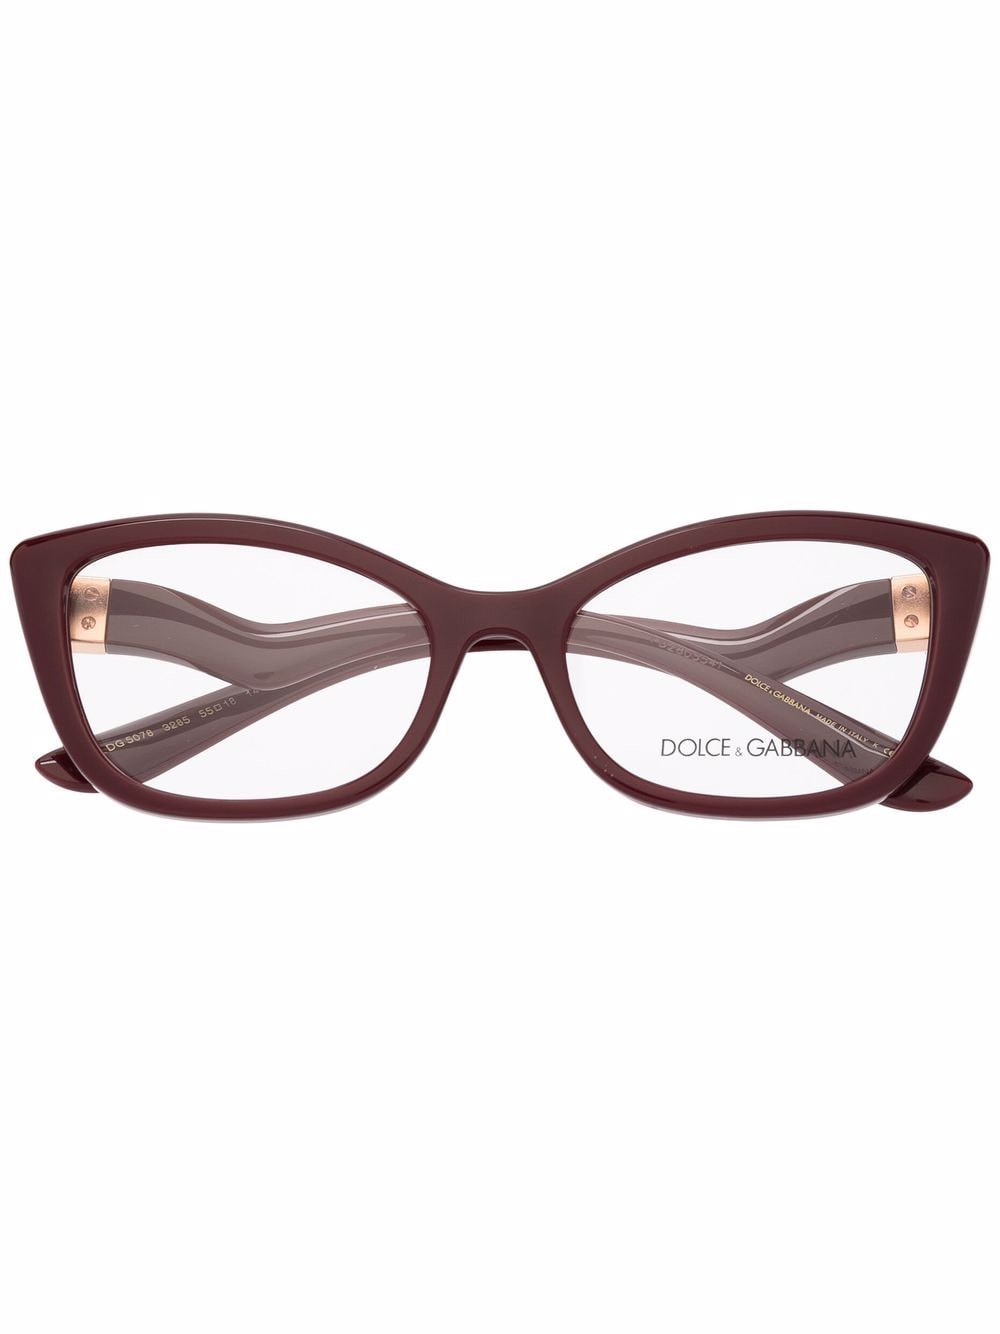 фото Dolce & gabbana eyewear очки в квадратной оправе